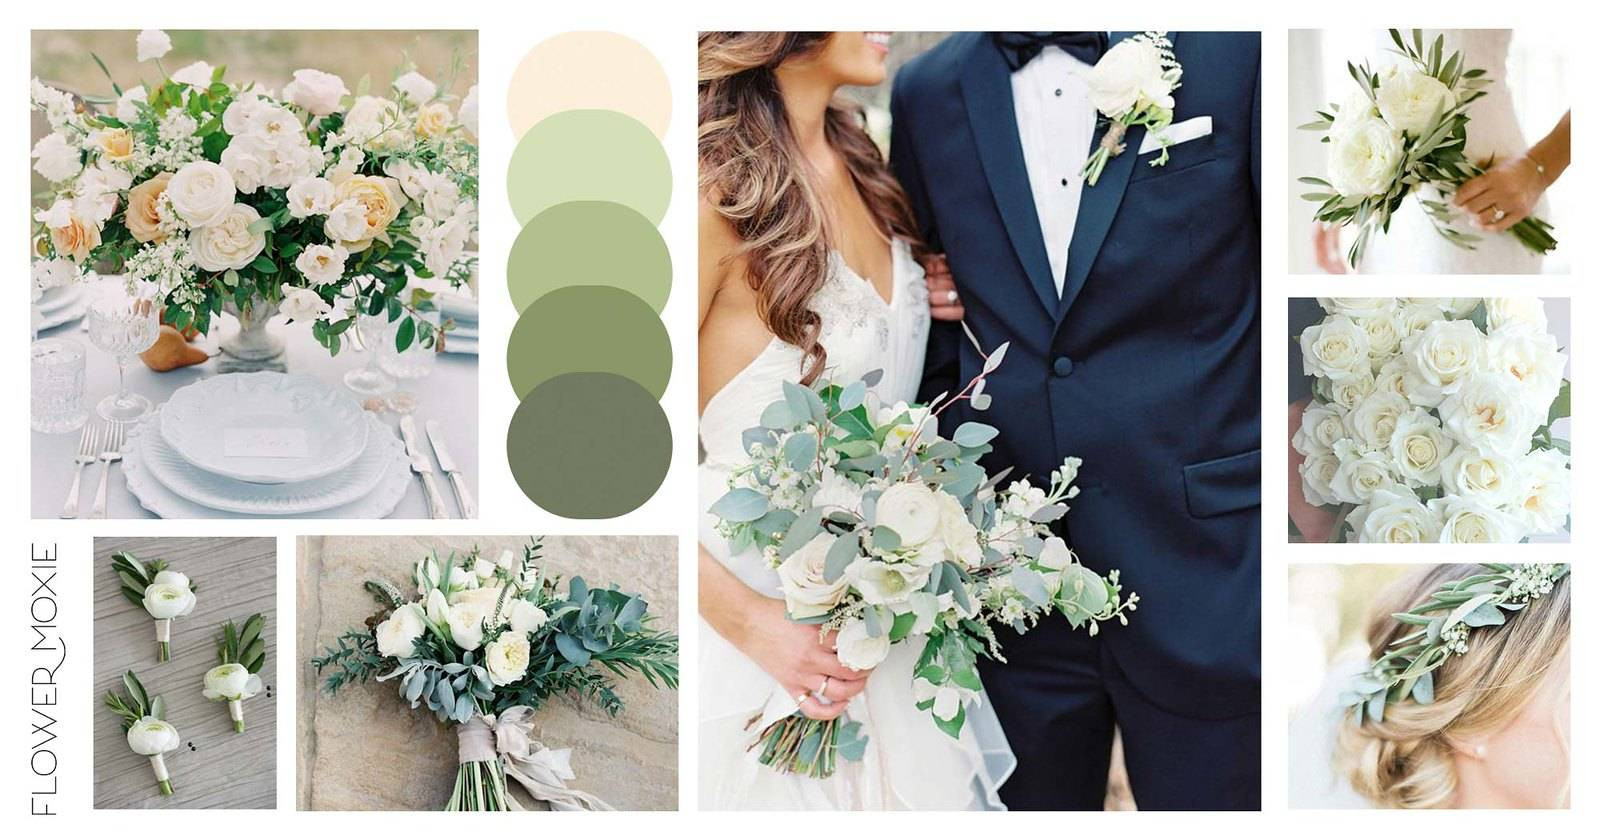 DIY Wedding Flower Packages
 Cream and Sage Wedding Flower Moodboard